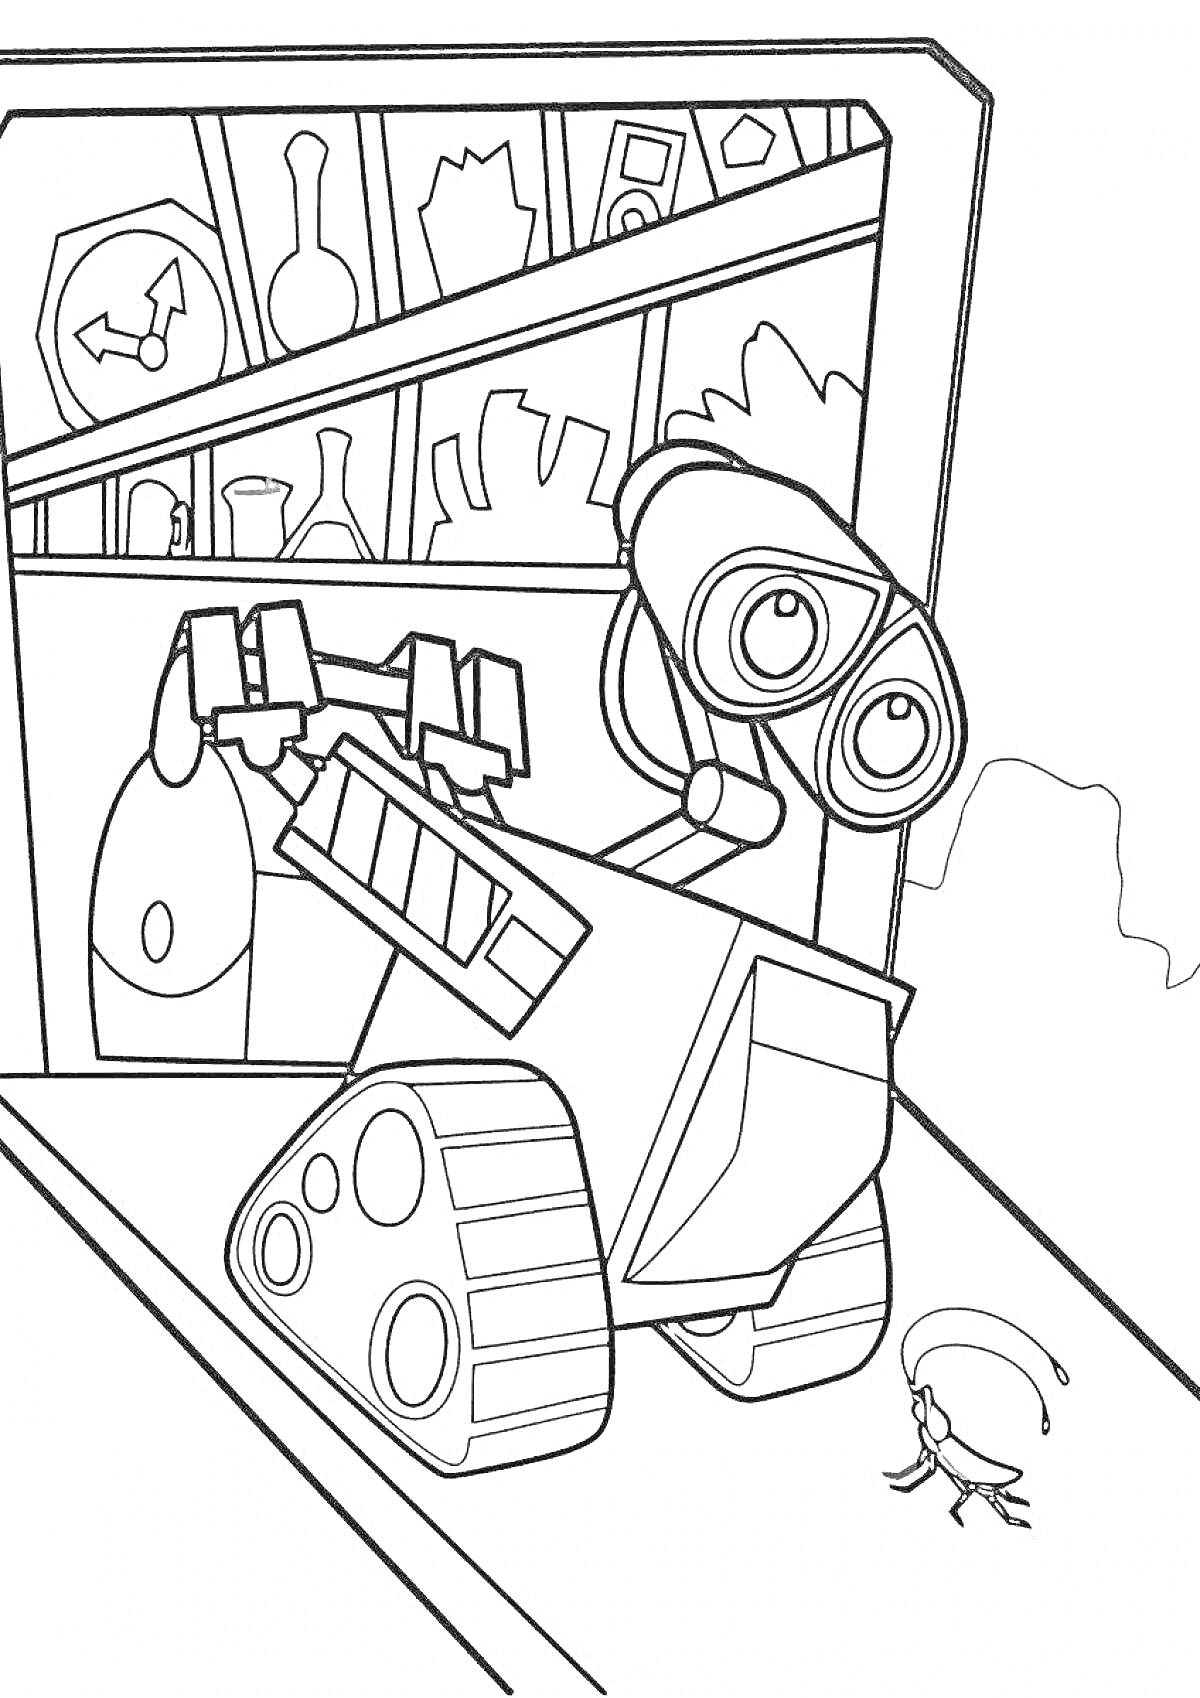 На раскраске изображено: Валли, Робот, Предметы, Кухня, Бутылка, Полки, Окна, Тараканы